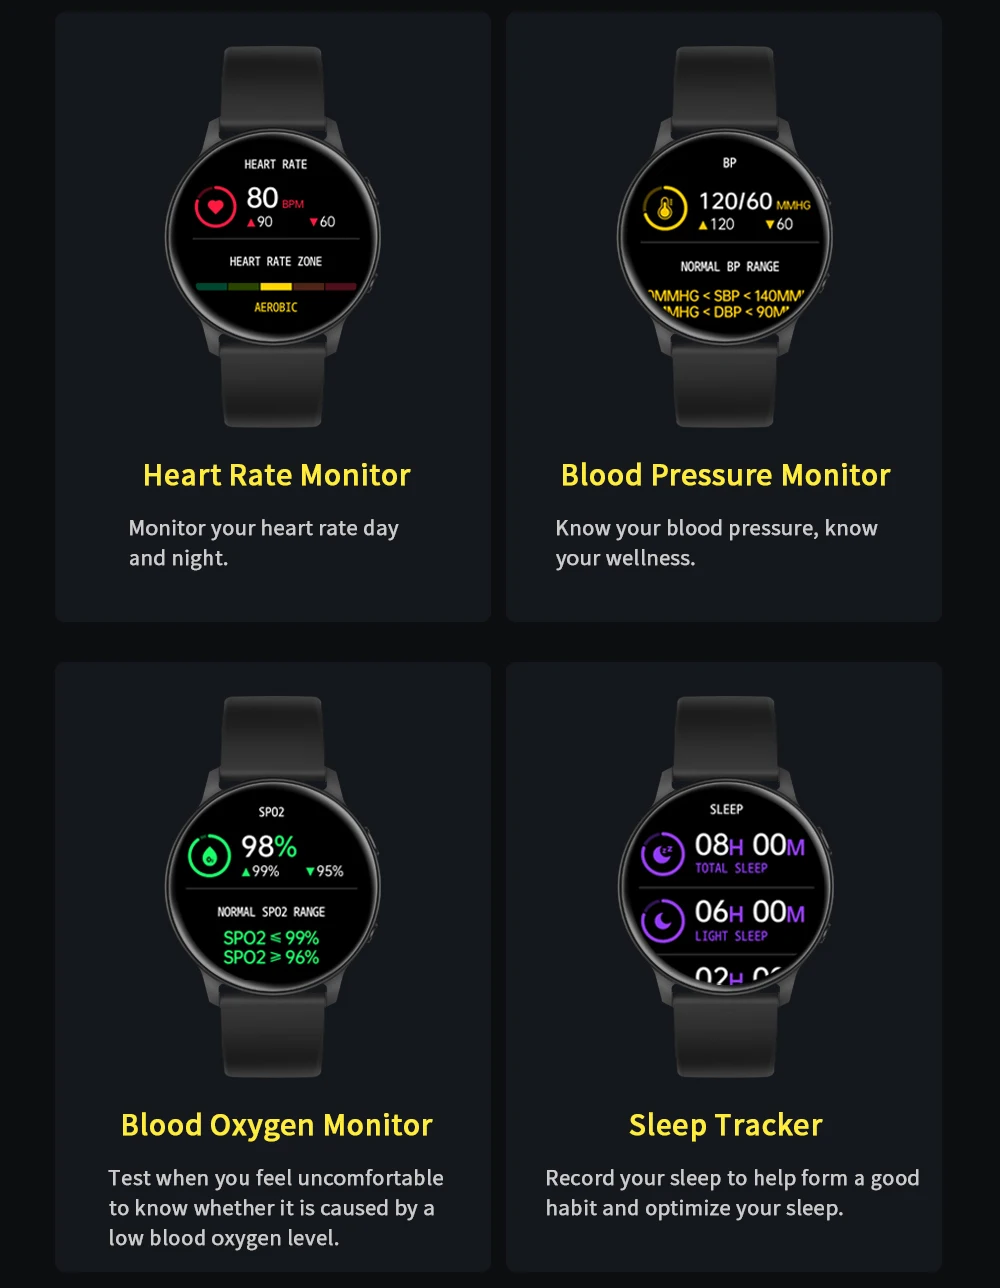 2022 New Smart Watch Men Full Touch Screen Sport Fitness Watch IP67 Waterproof Bluetooth For Android ios smartwatch Men+box - ANKUX Tech Co., Ltd